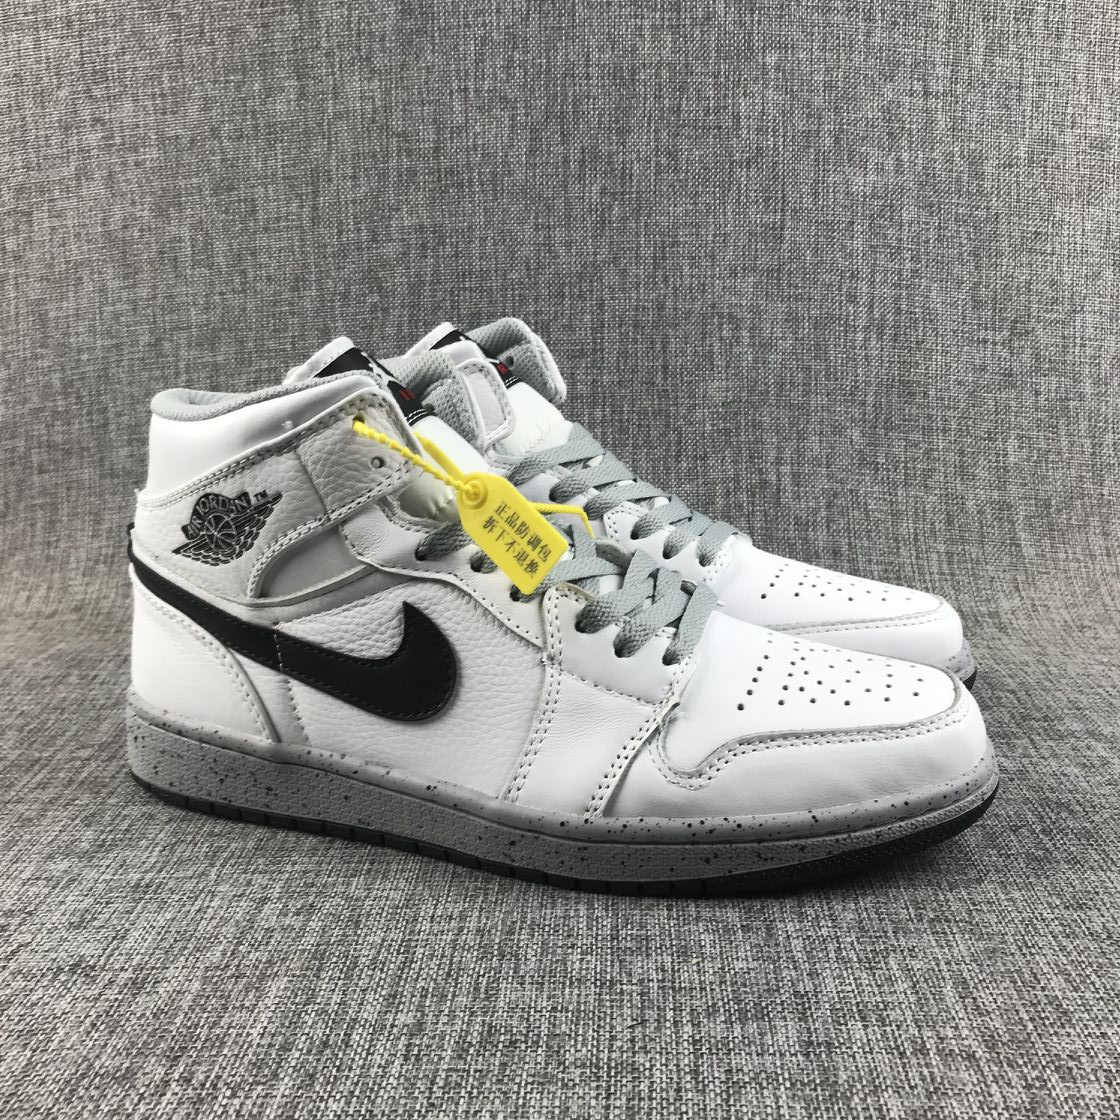 Air Jordan 1 White Cement Shoes